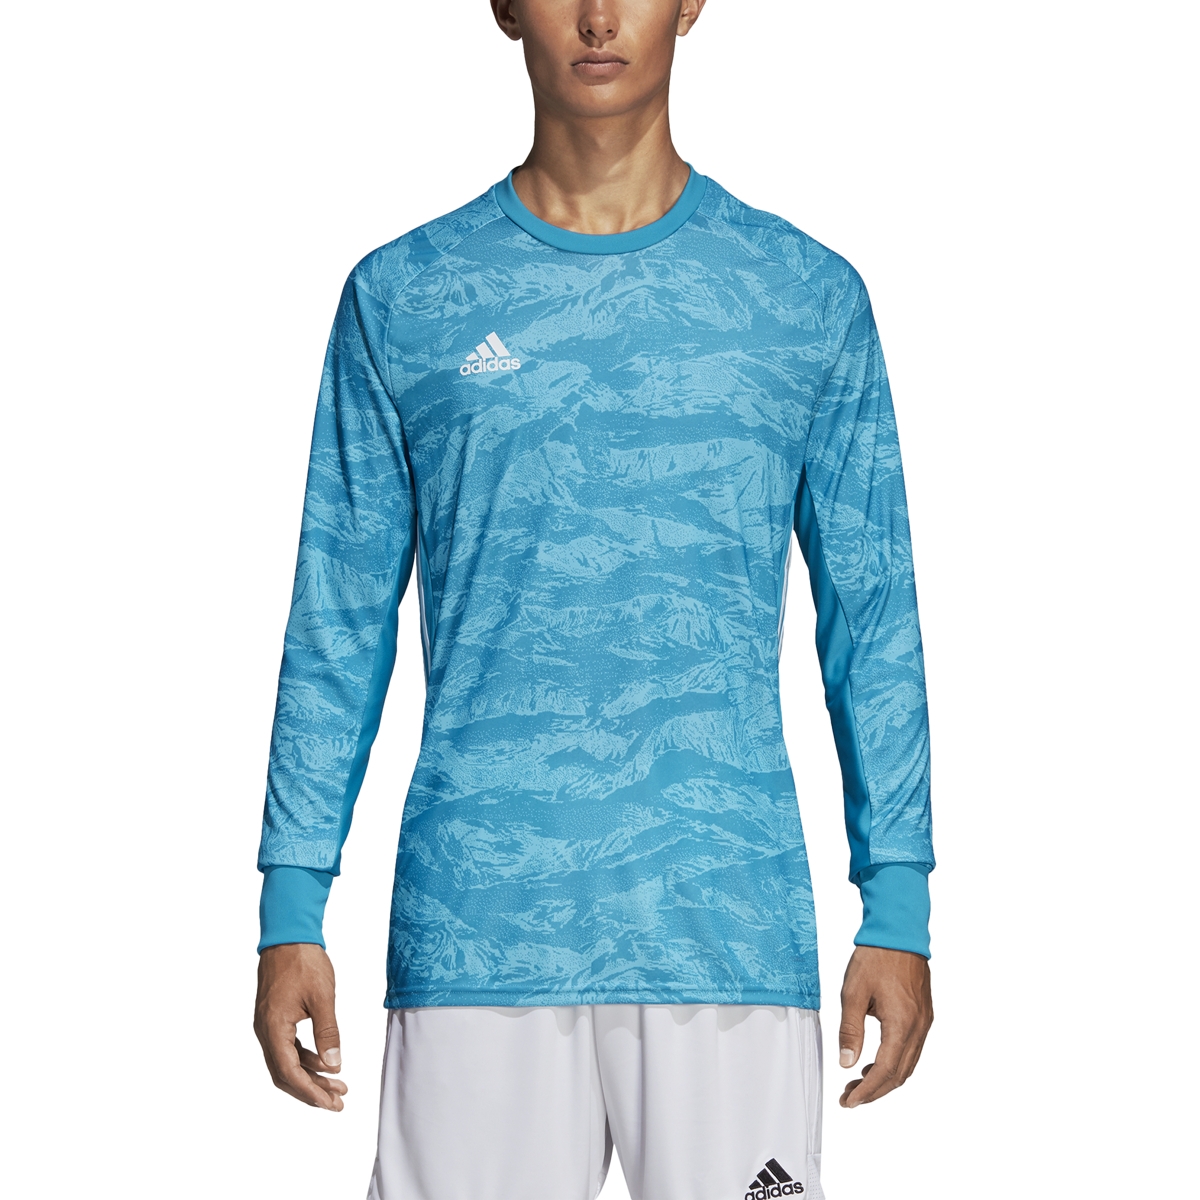 adidas adipro 19 goalkeeper kit